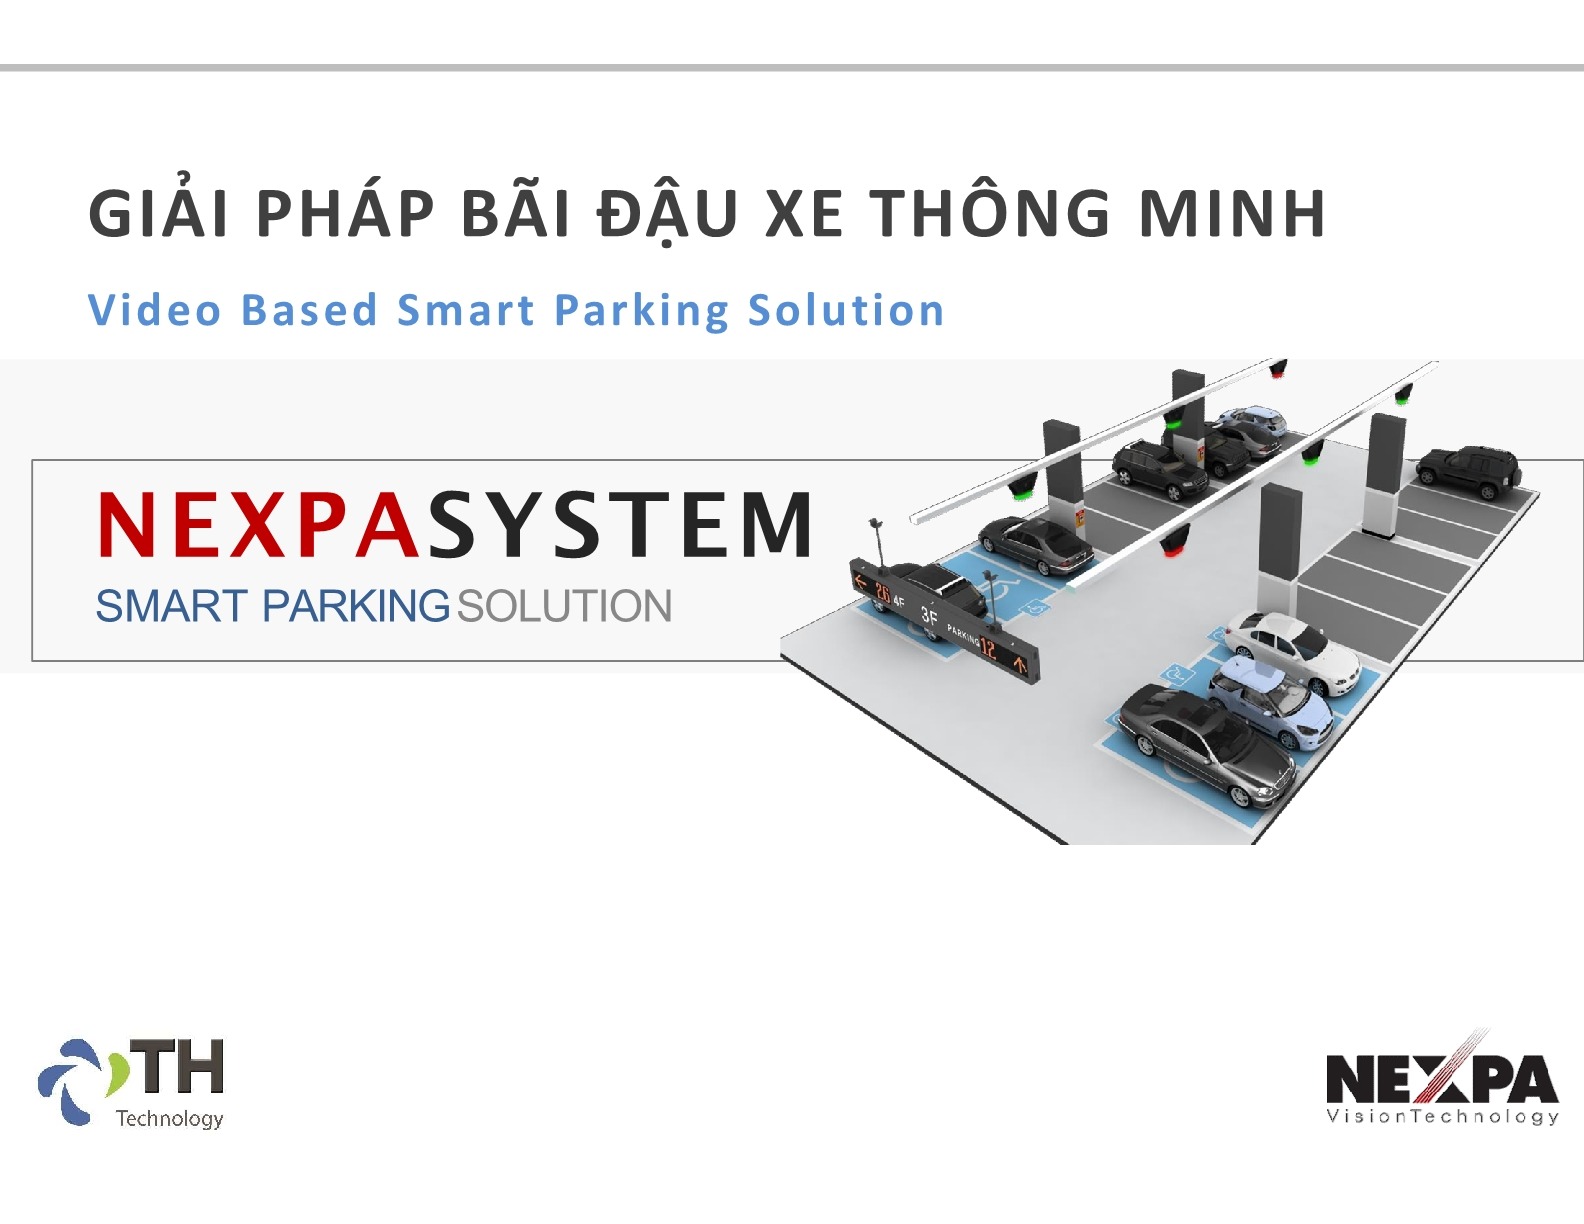 Nexpa Video Based Smart Parking